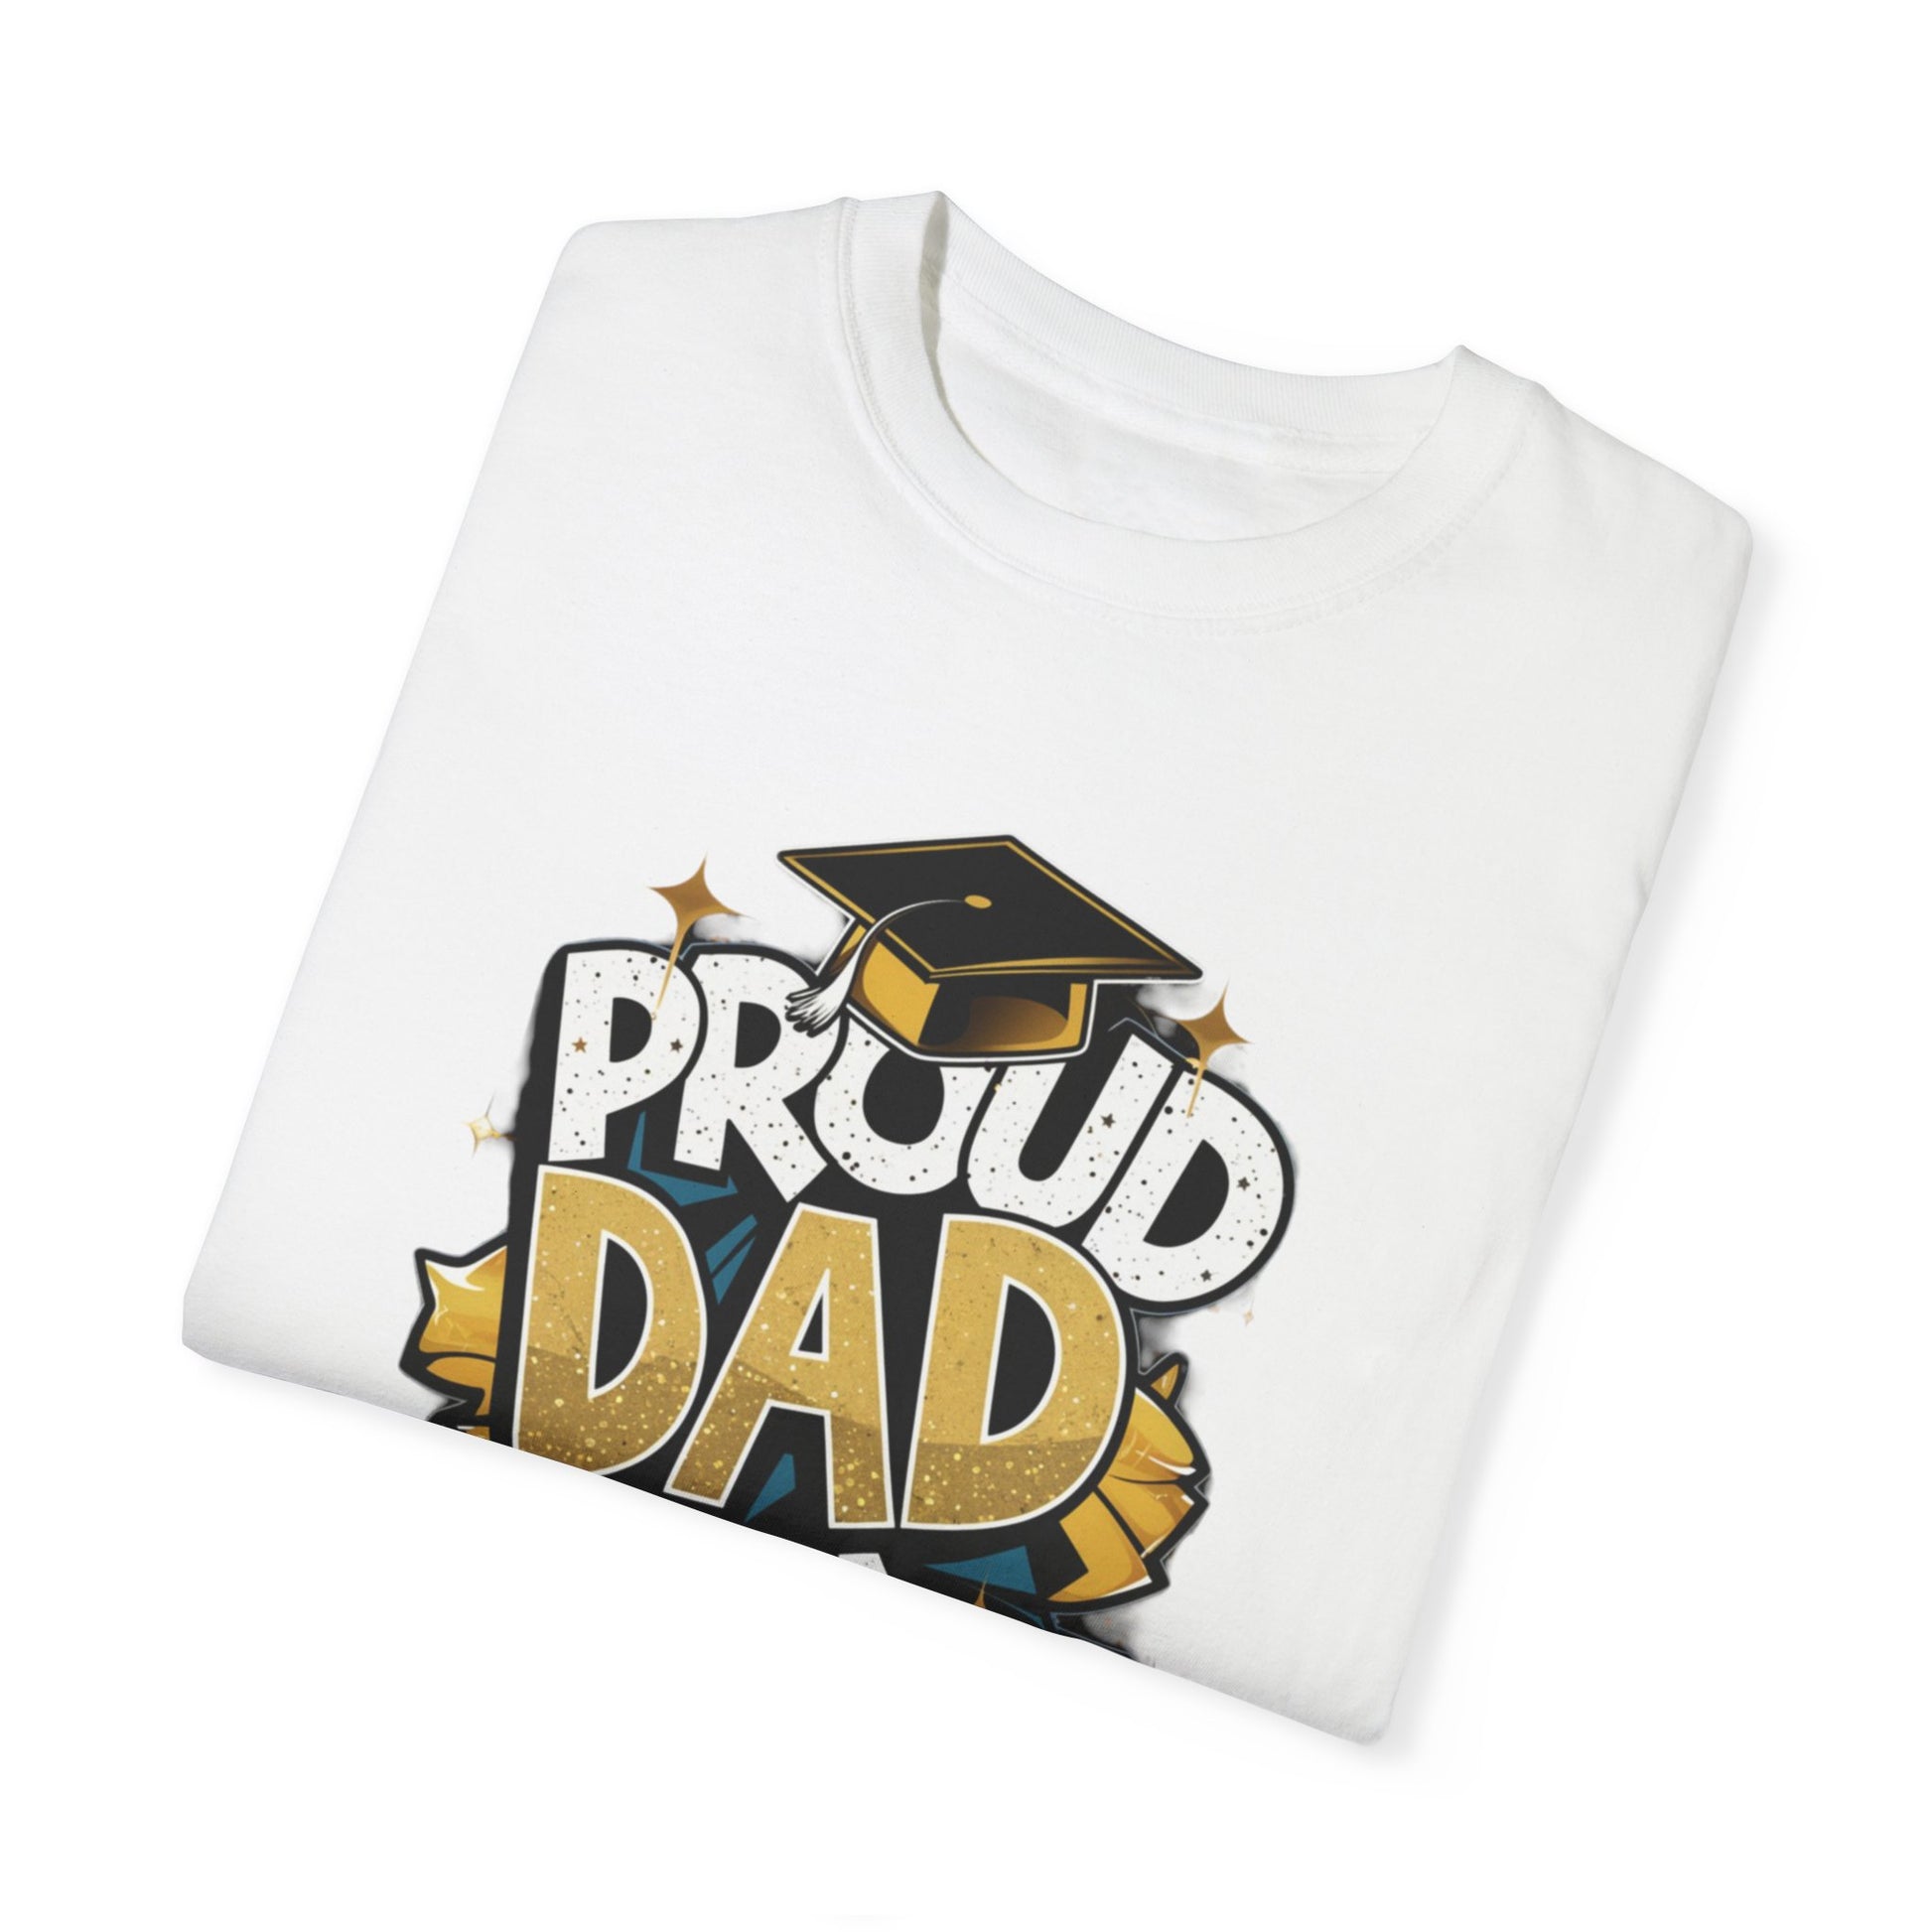 Proud Dad of a 2024 Graduate Unisex Garment-dyed T-shirt Cotton Funny Humorous Graphic Soft Premium Unisex Men Women White T-shirt Birthday Gift-23